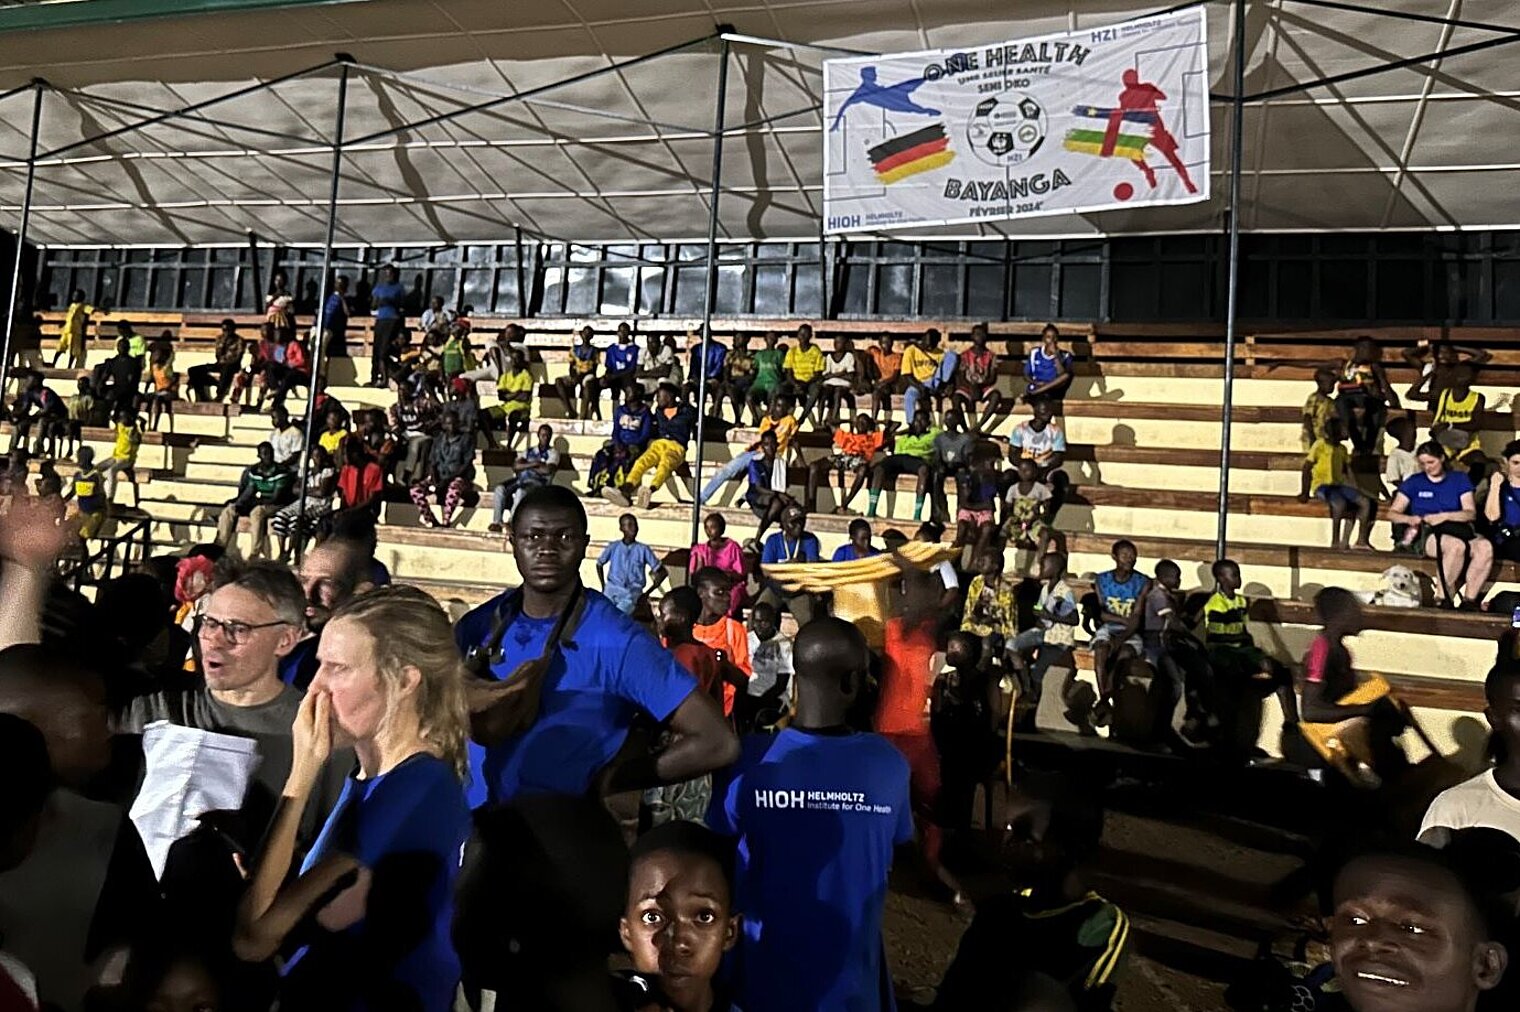 One Health football tournament in Bayanga